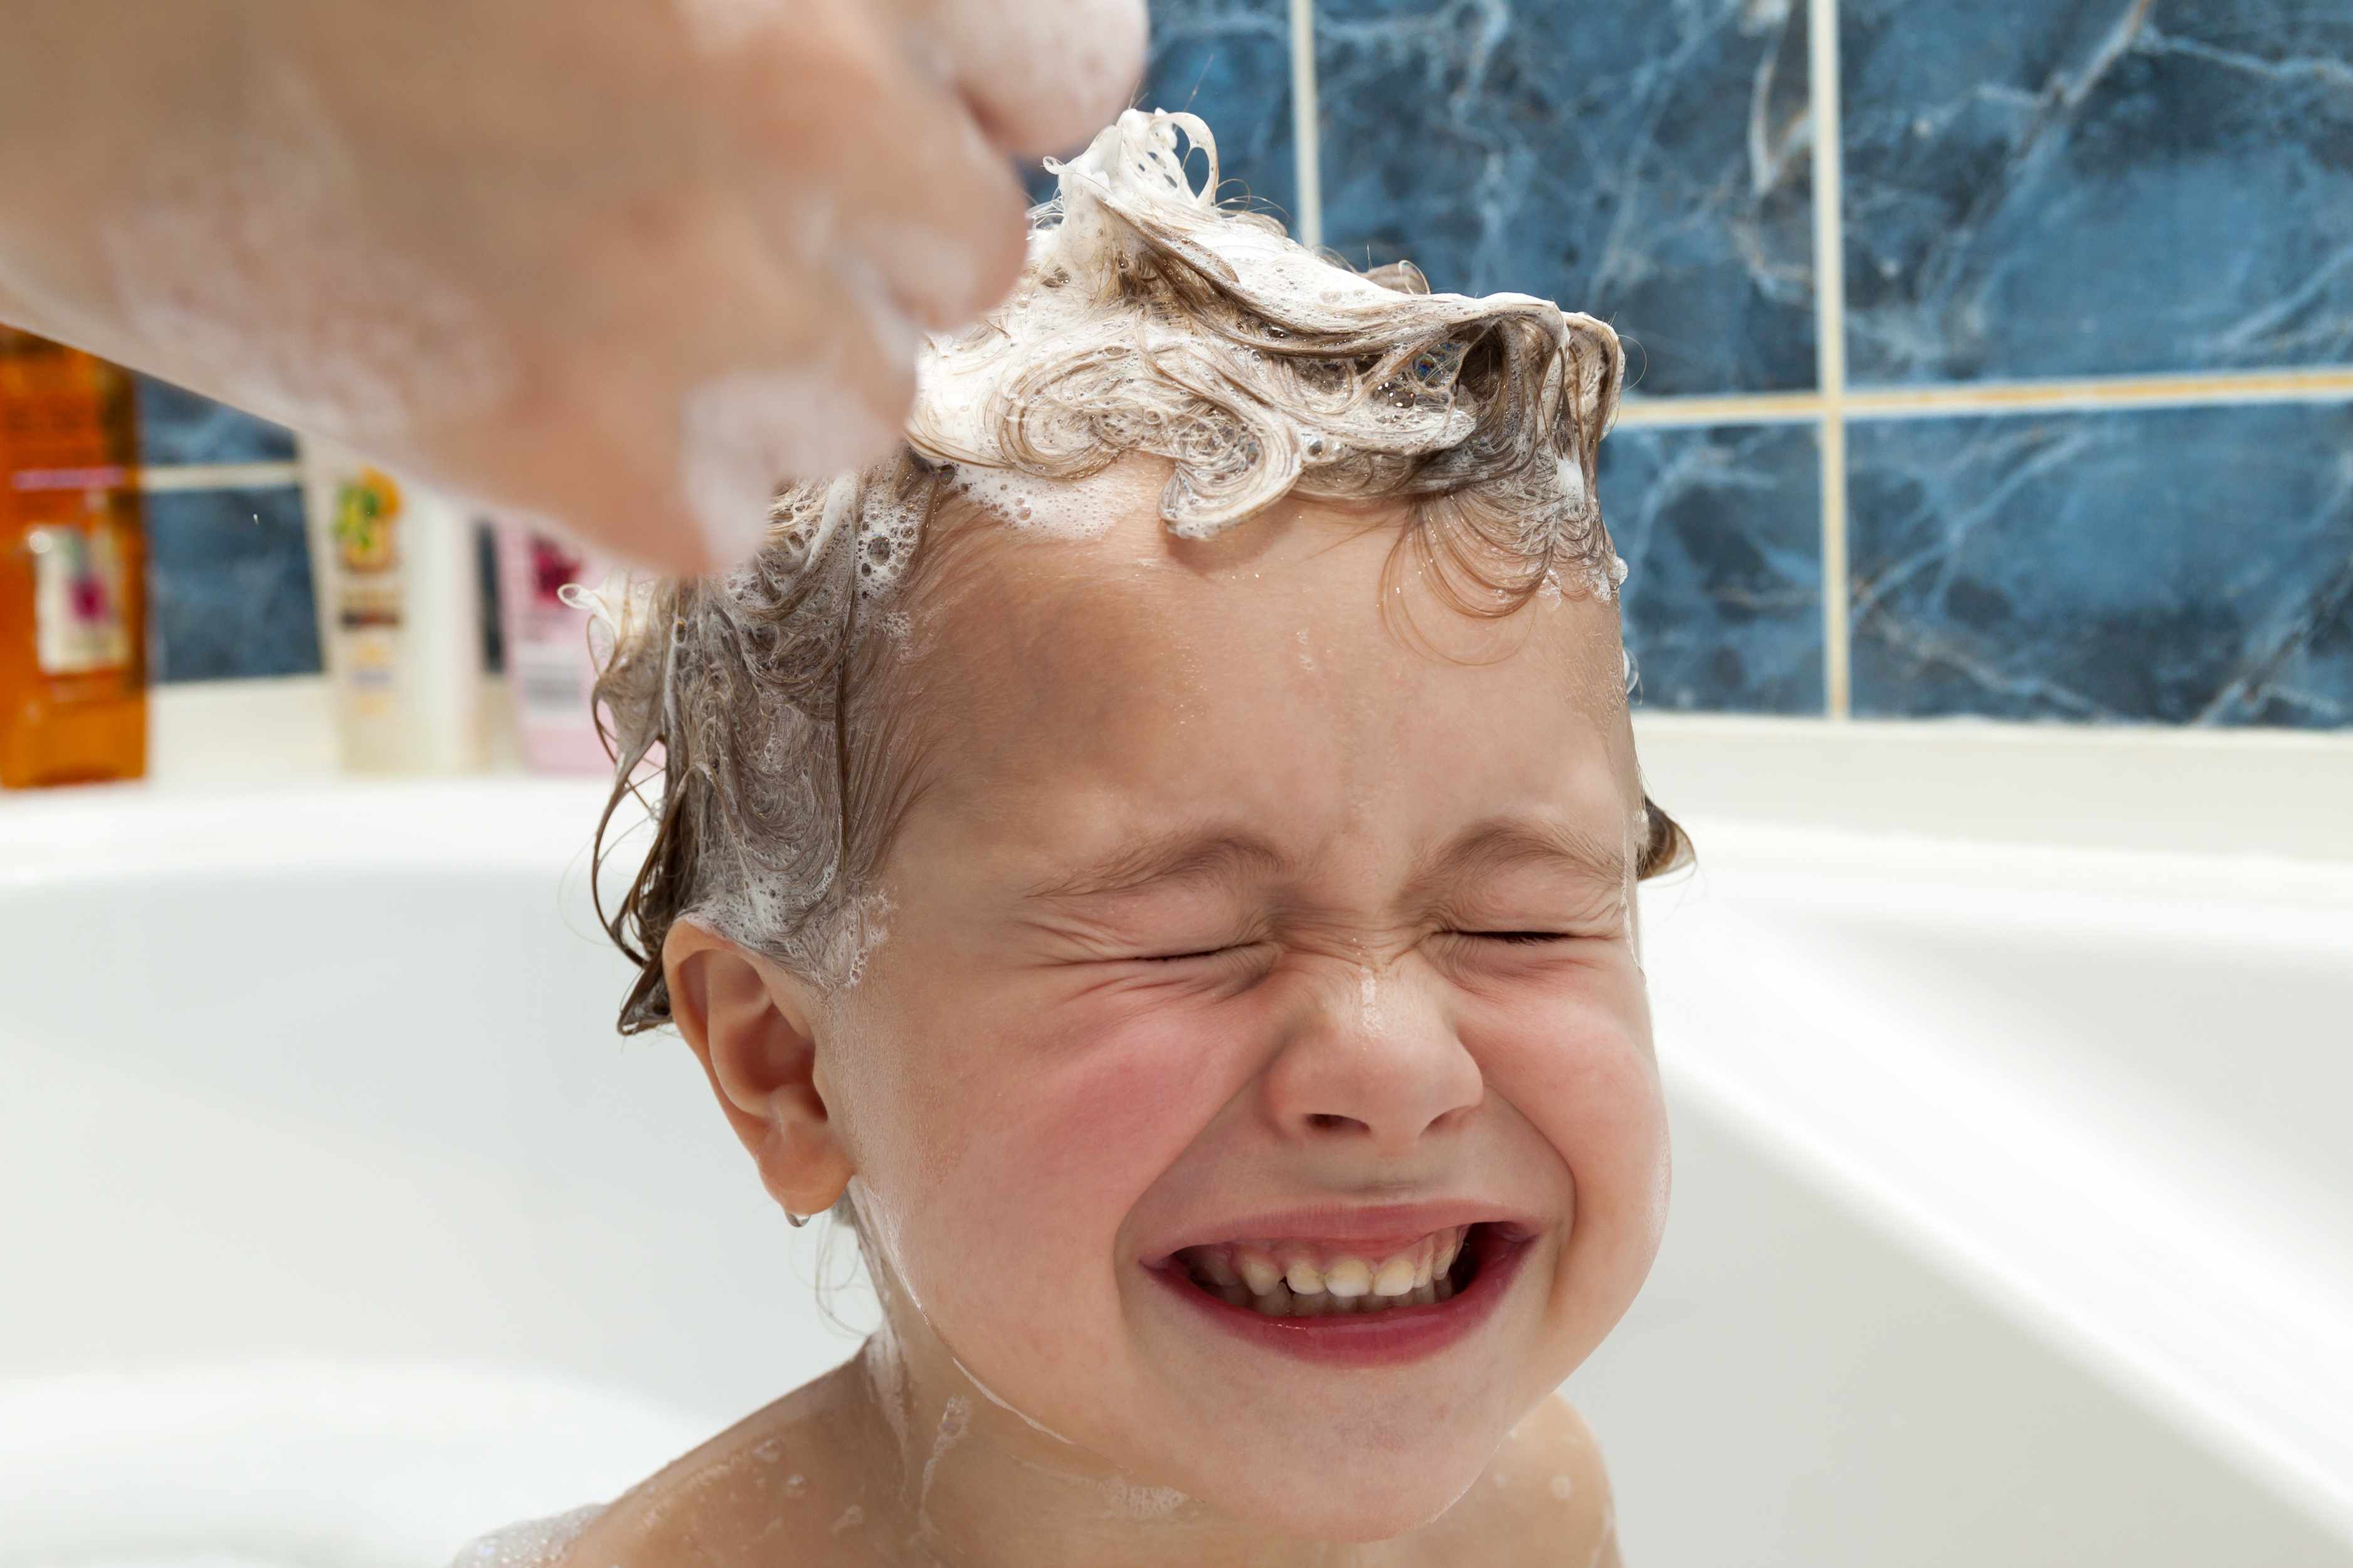 a little boy or girl having hair washed with shampoo in a bathtub